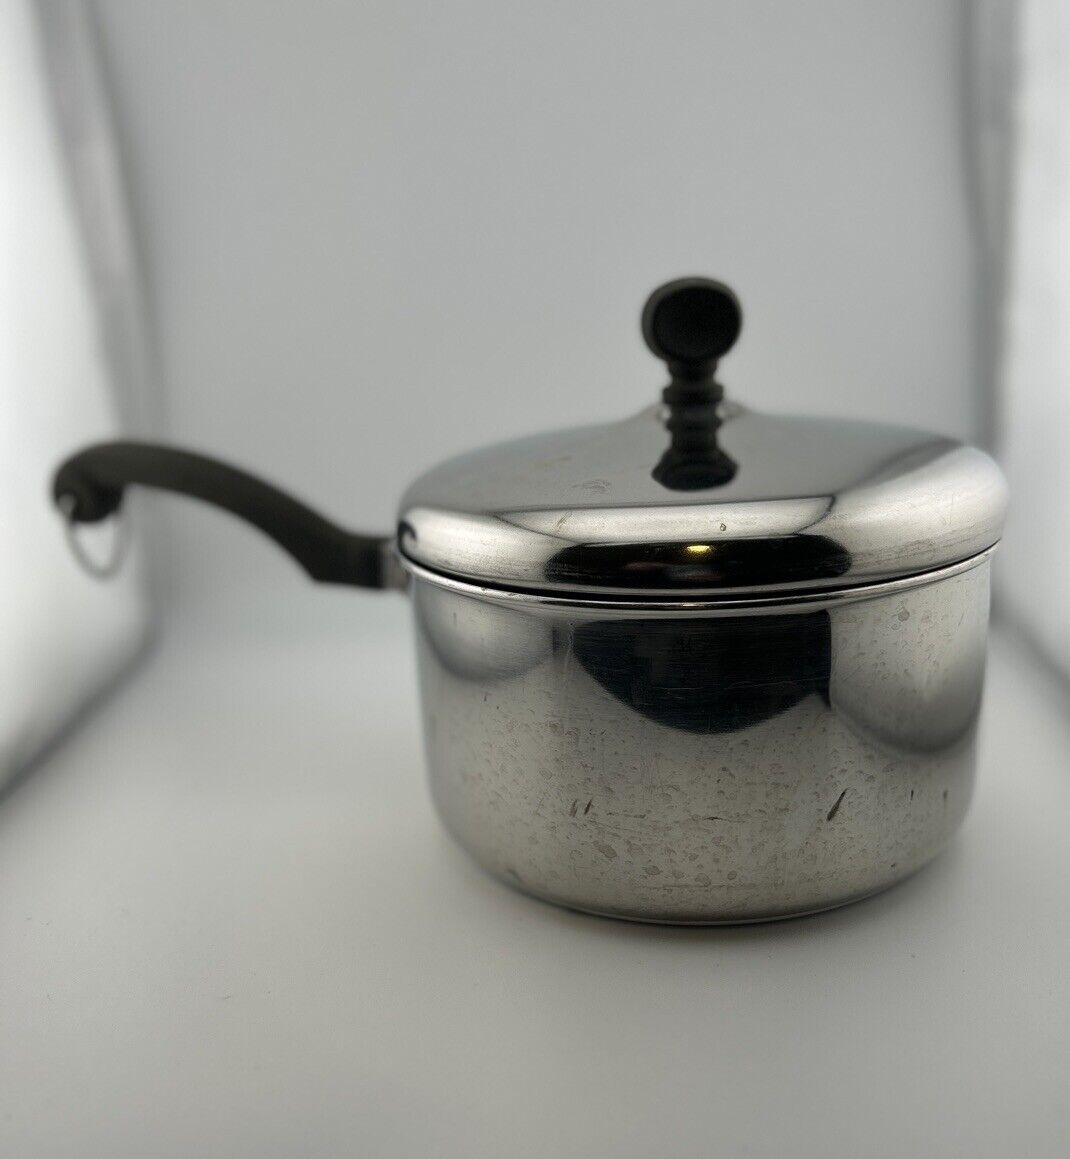 Vintage Farberware 2 QT Aluminum Clad Stainless Sauce Pan Pot with Lid, kitchen